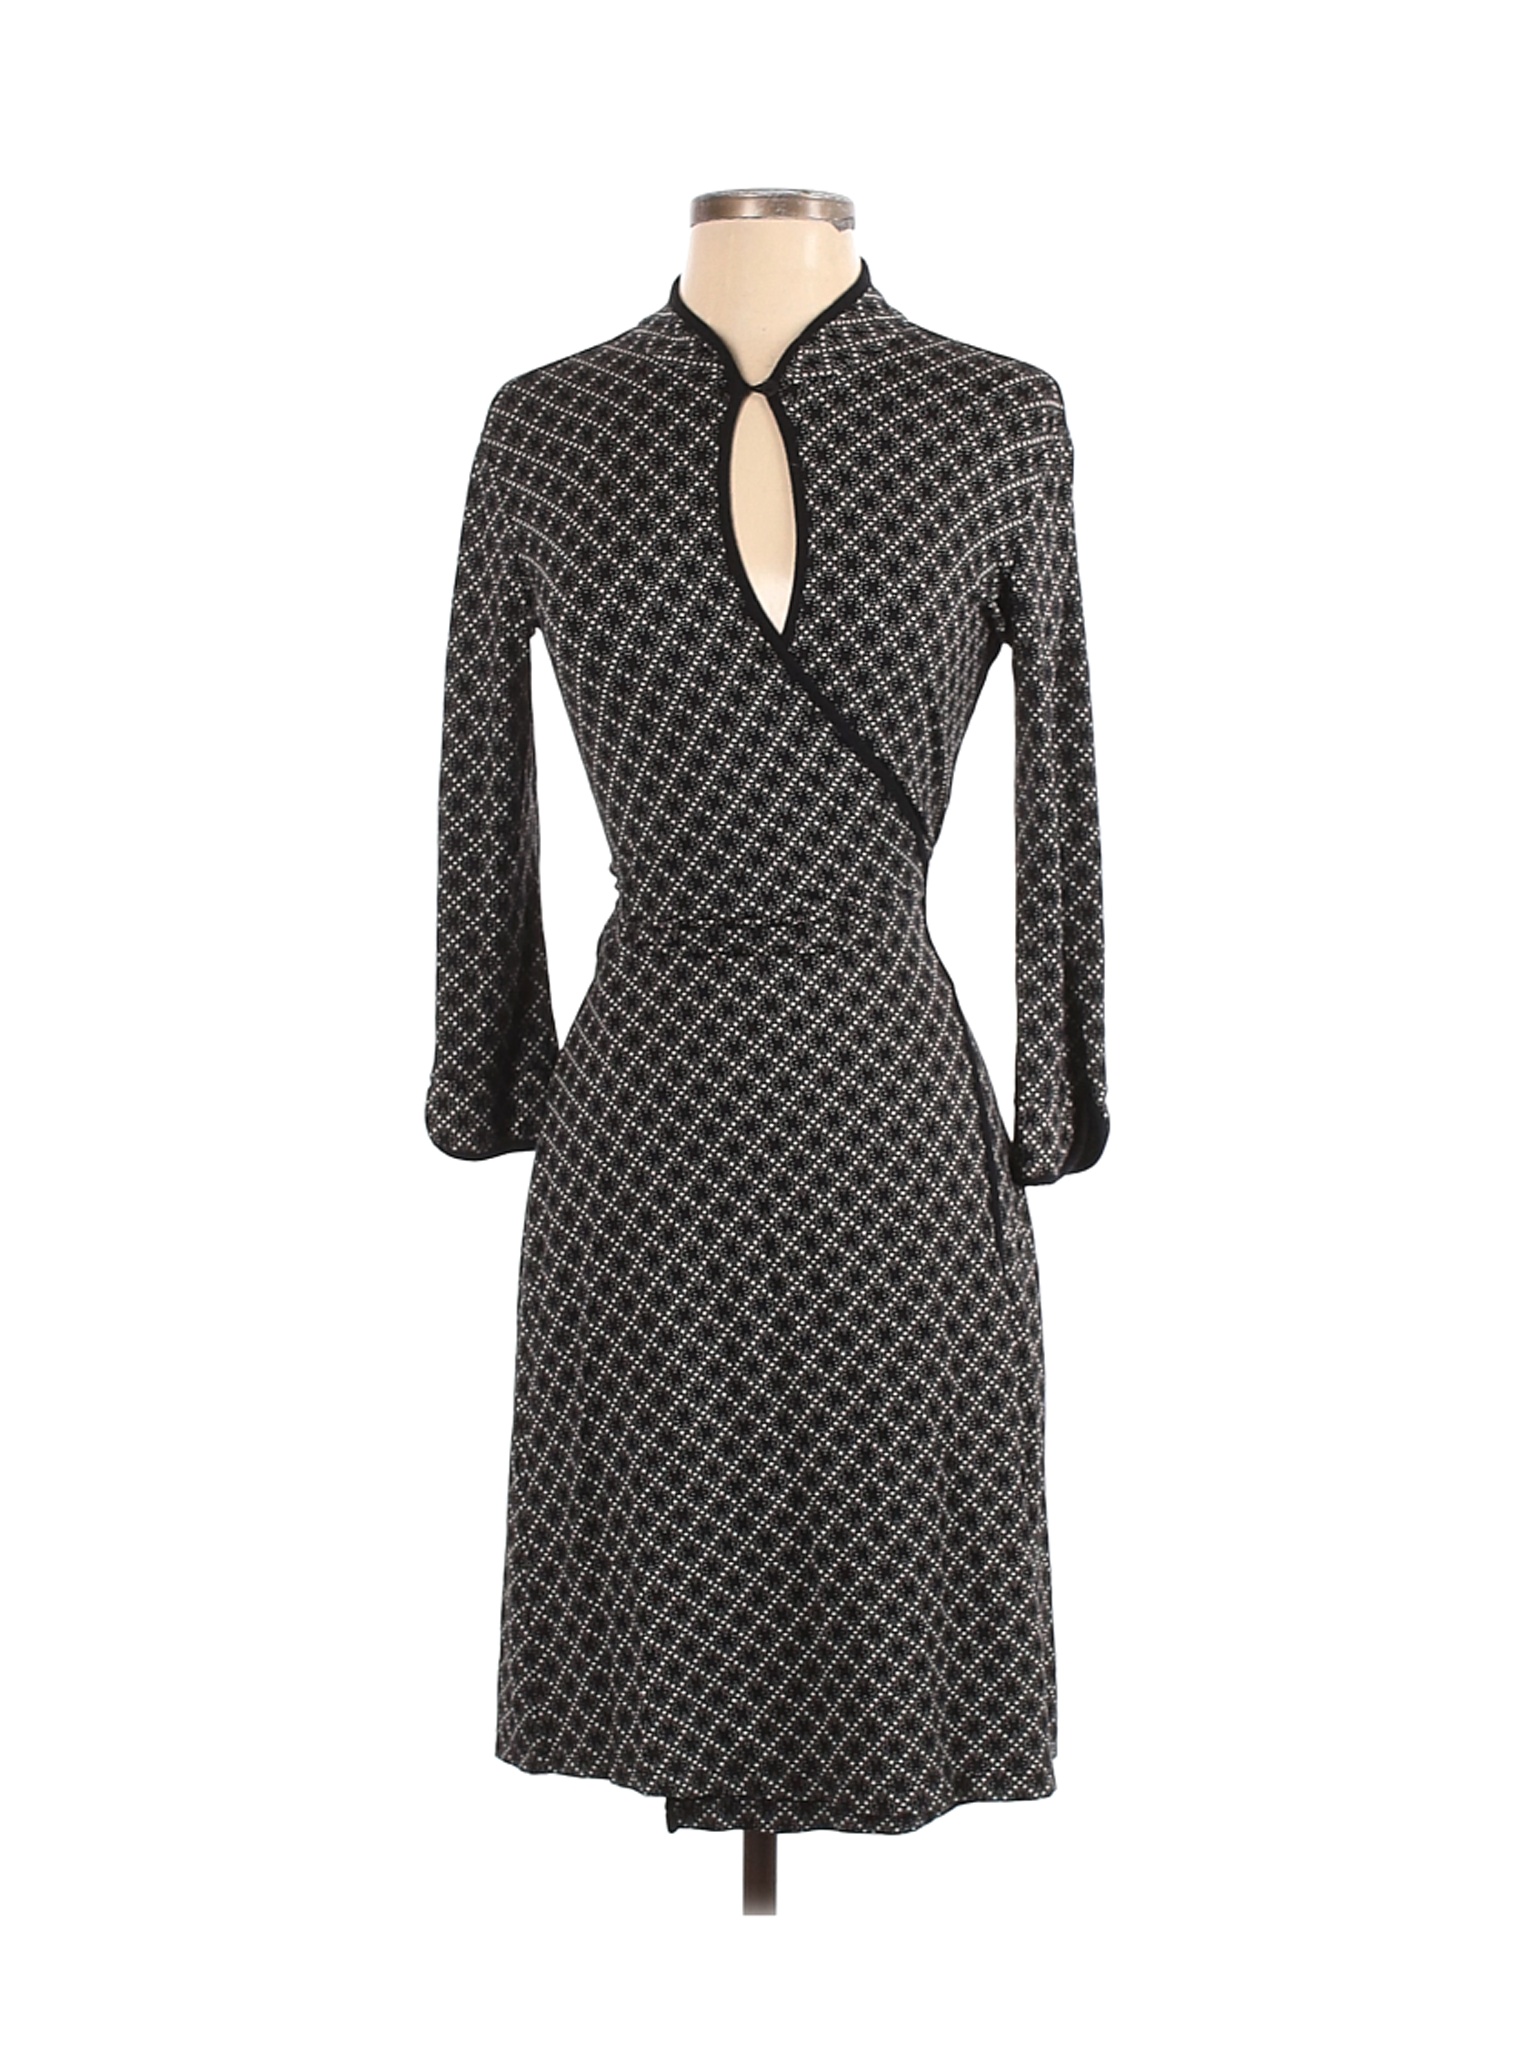 Portmans Women Black Casual Dress XS | eBay